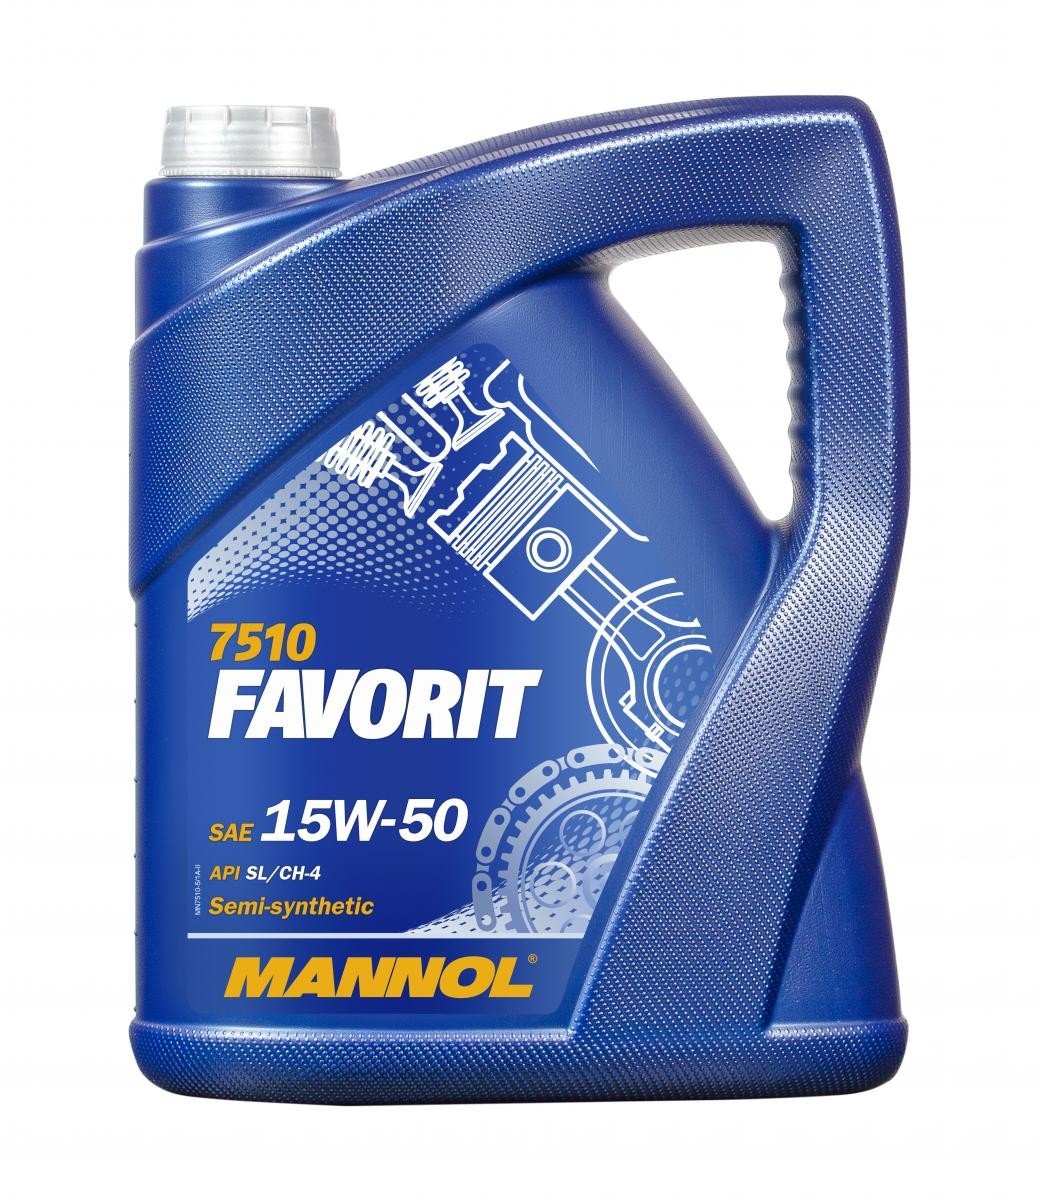 MN7510-5 MANNOL FAVORIT 15W-50, 5l, Teilsynthetiköl Motoröl MN7510-5 günstig kaufen